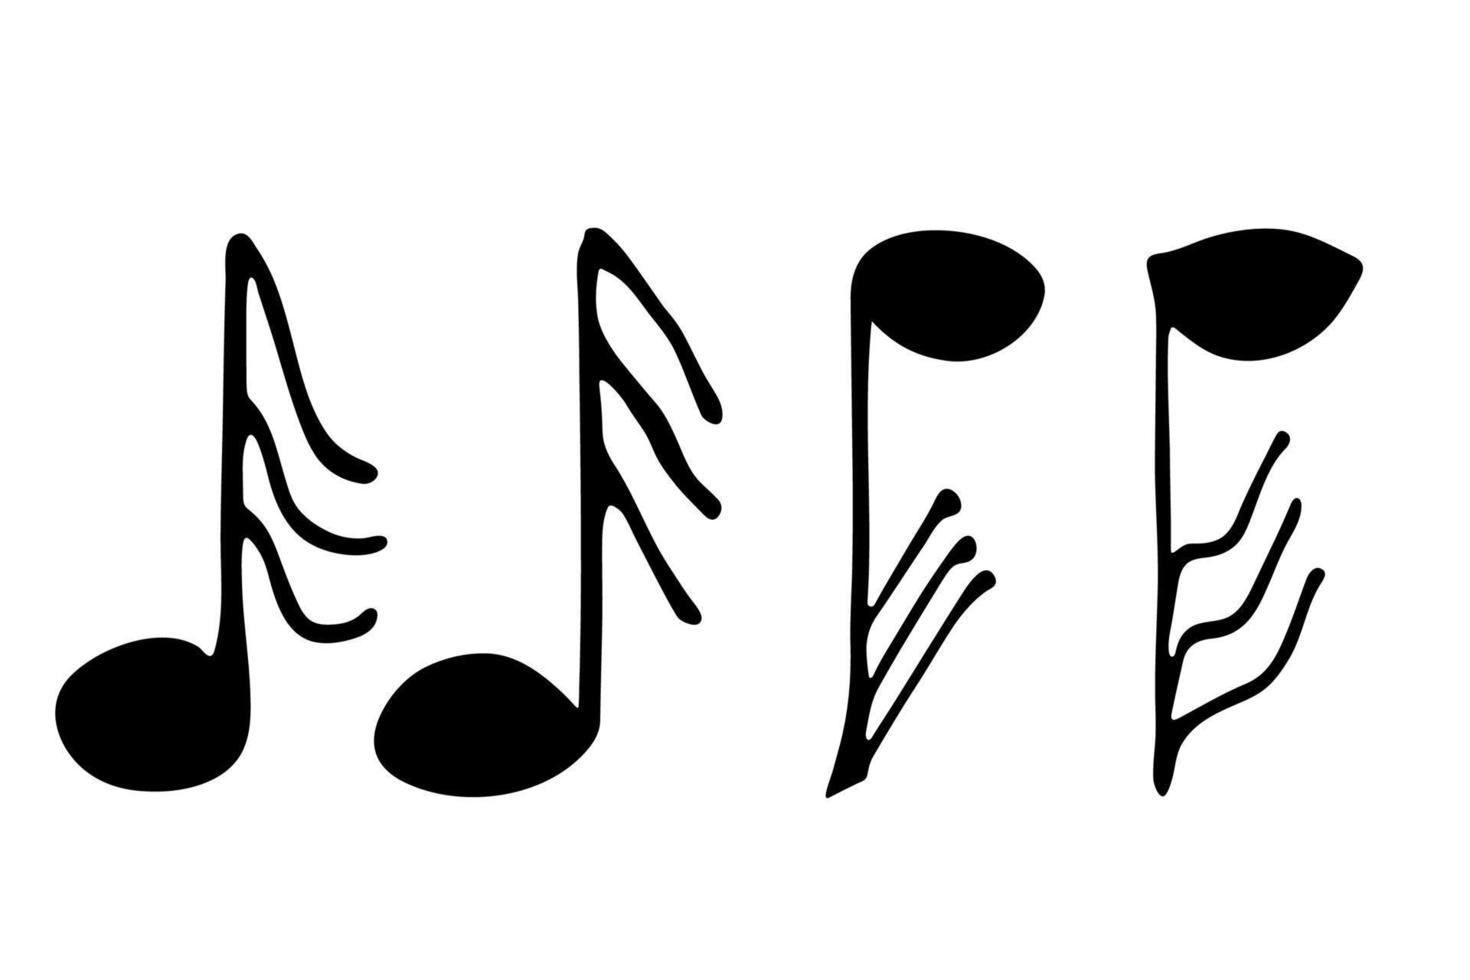 conjunto de garabatos de notas musicales. símbolo musical dibujado a mano. elementos para impresión, web, diseño, decoración, logotipo vector